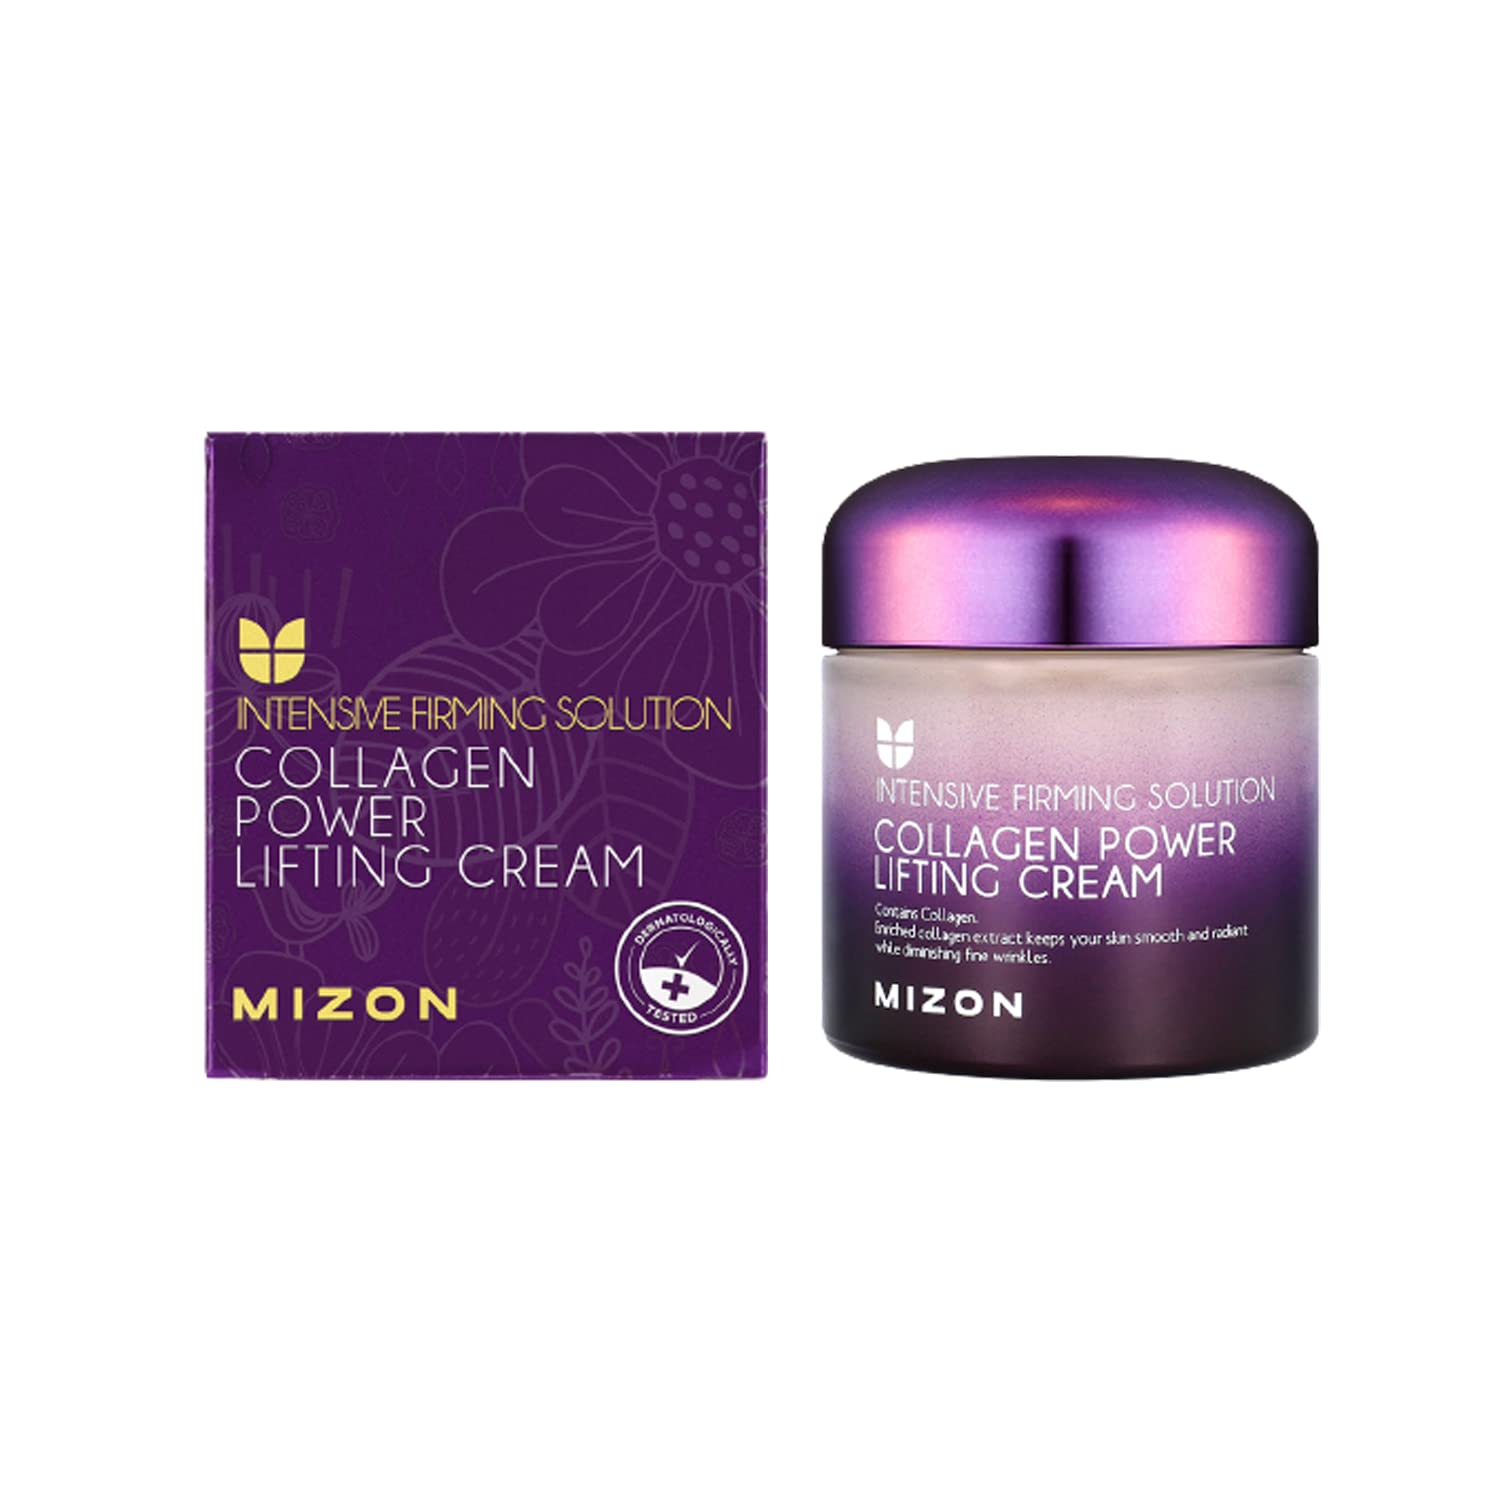 Mizon Intensive Firming Solution Collagen Power Lifting Cream 75ml